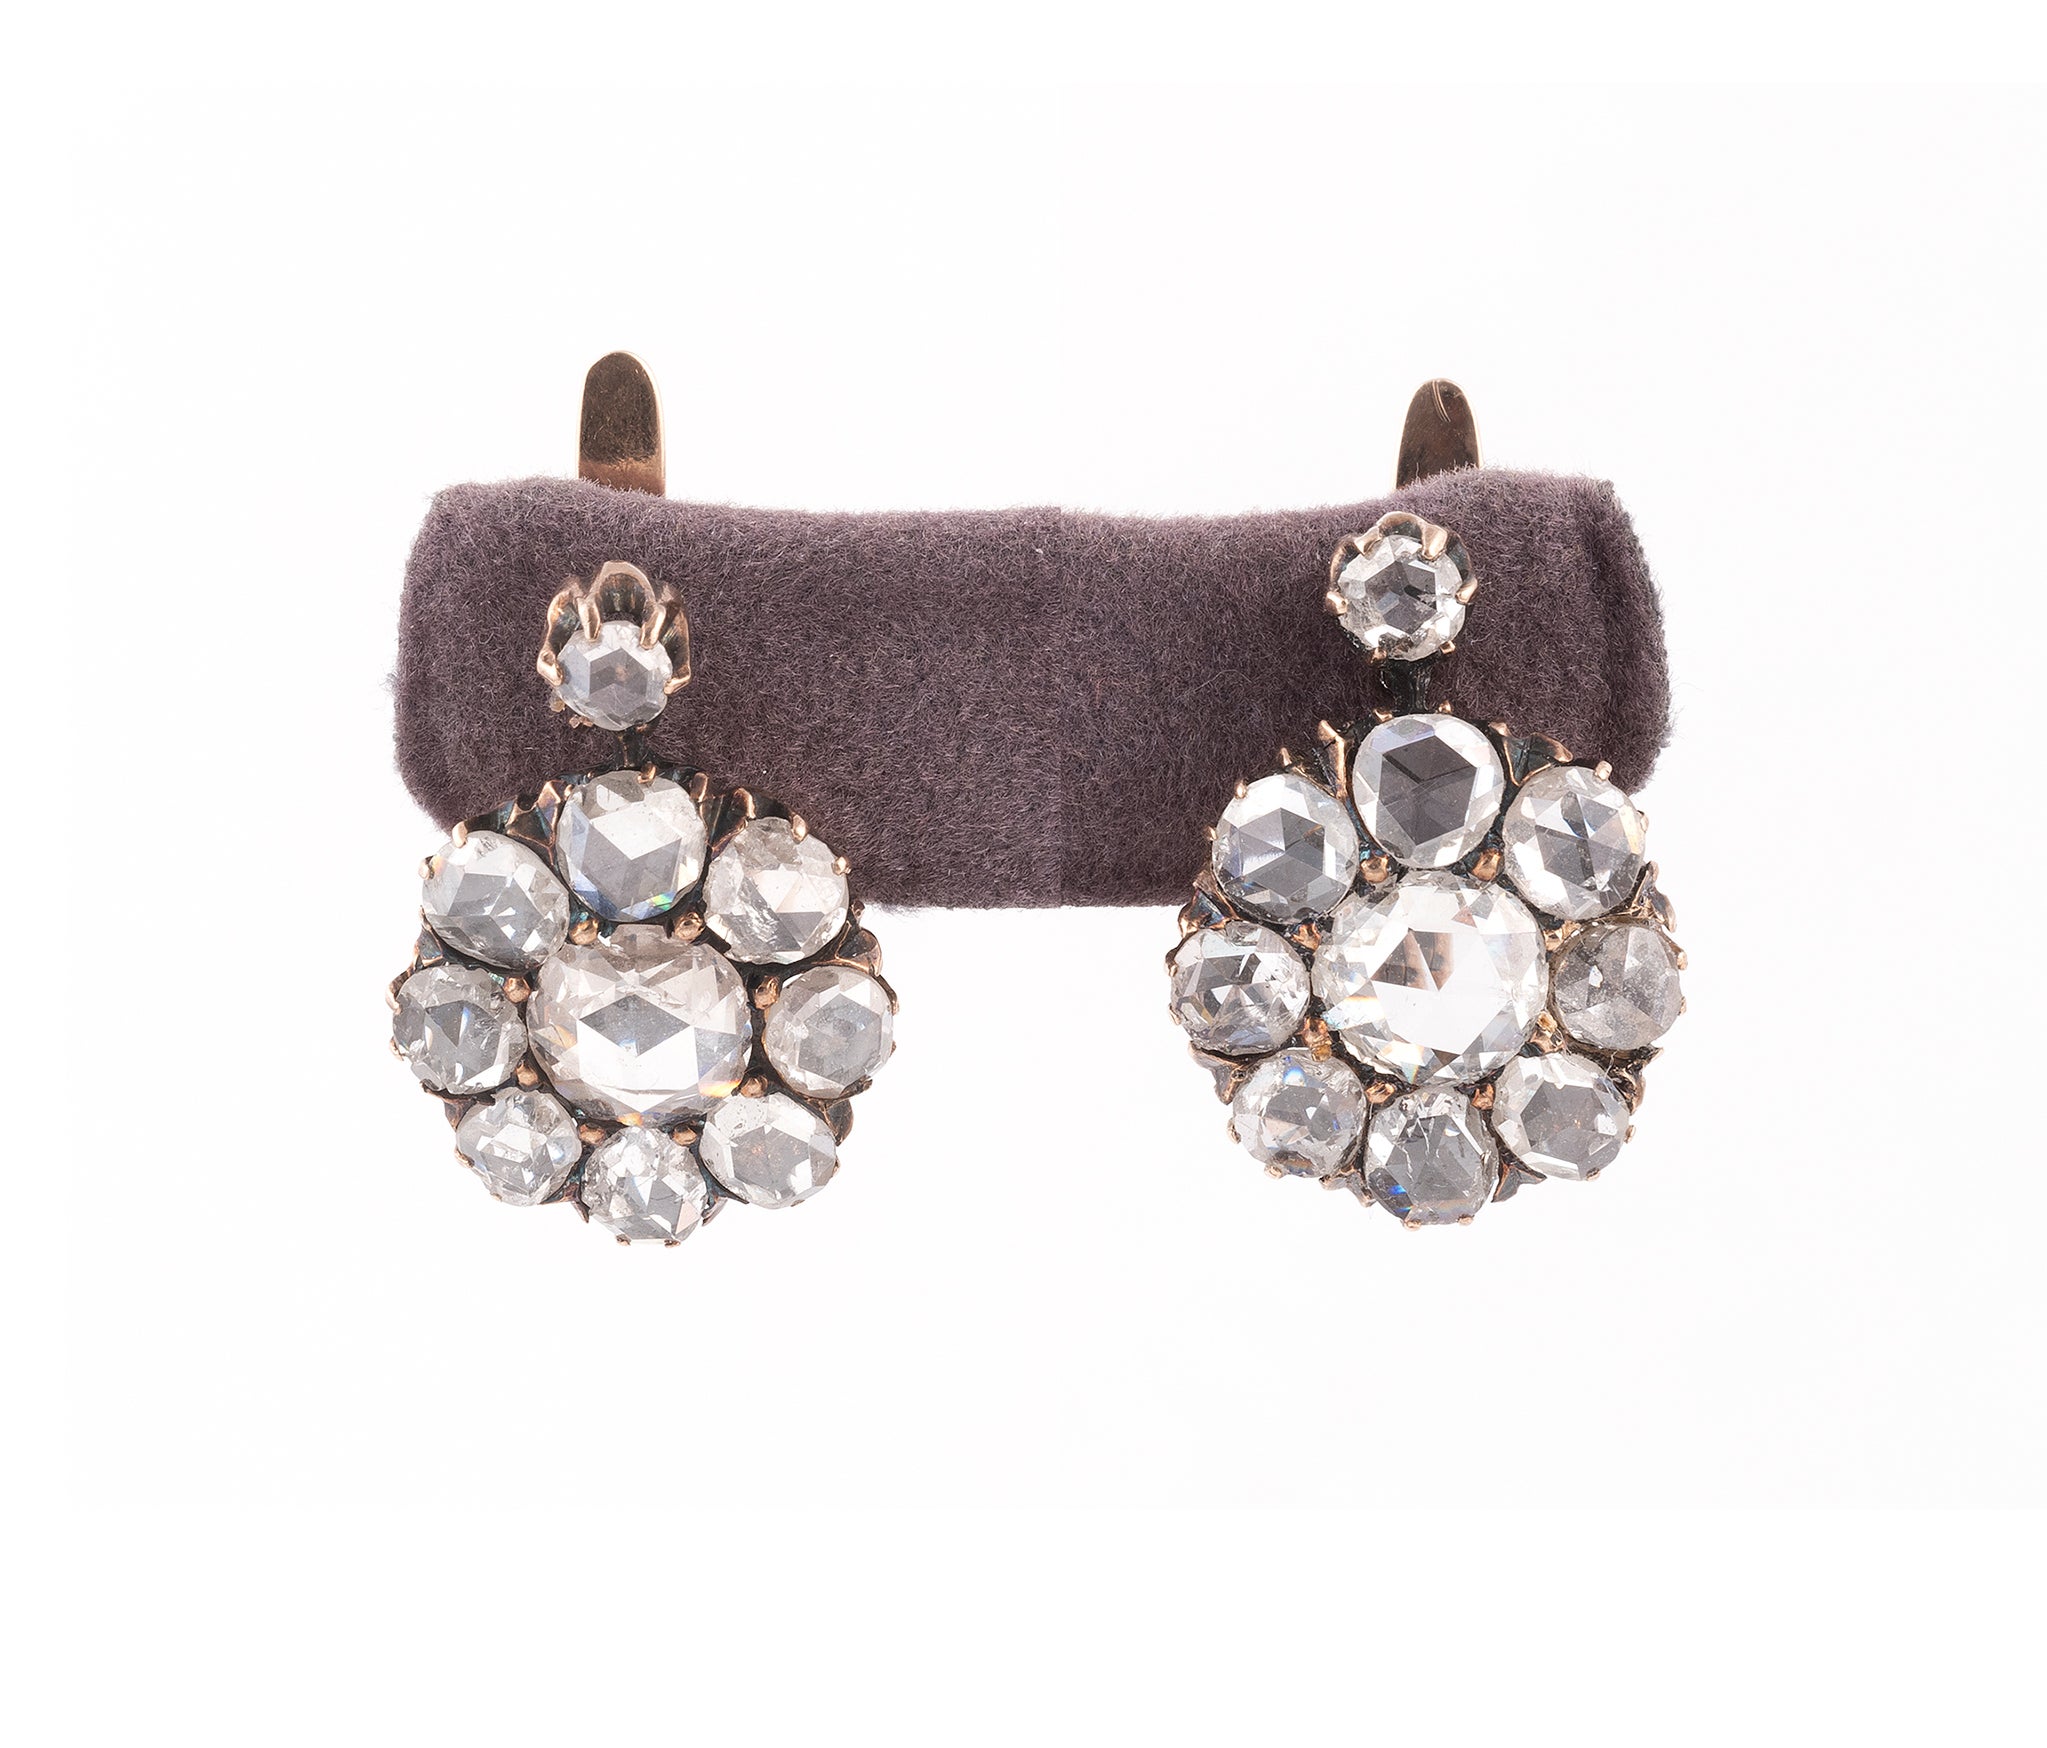 Pair of Antique Rose Diamond Earrings, circa 1880